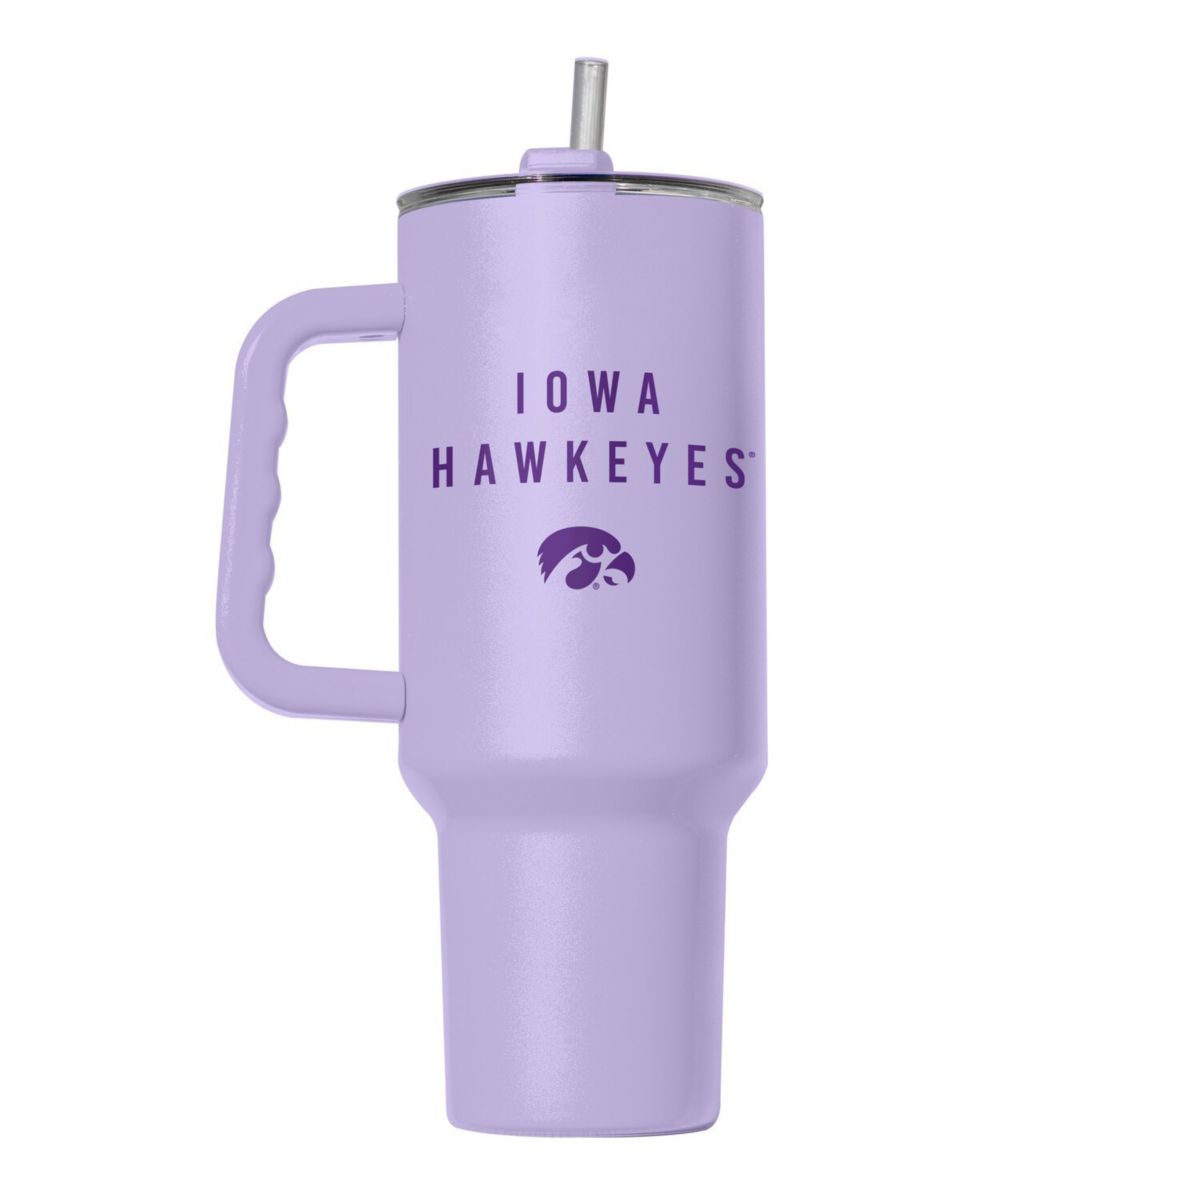 Iowa Hawkeyes 40oz. Lavender Soft Touch Tumbler Logo Brand